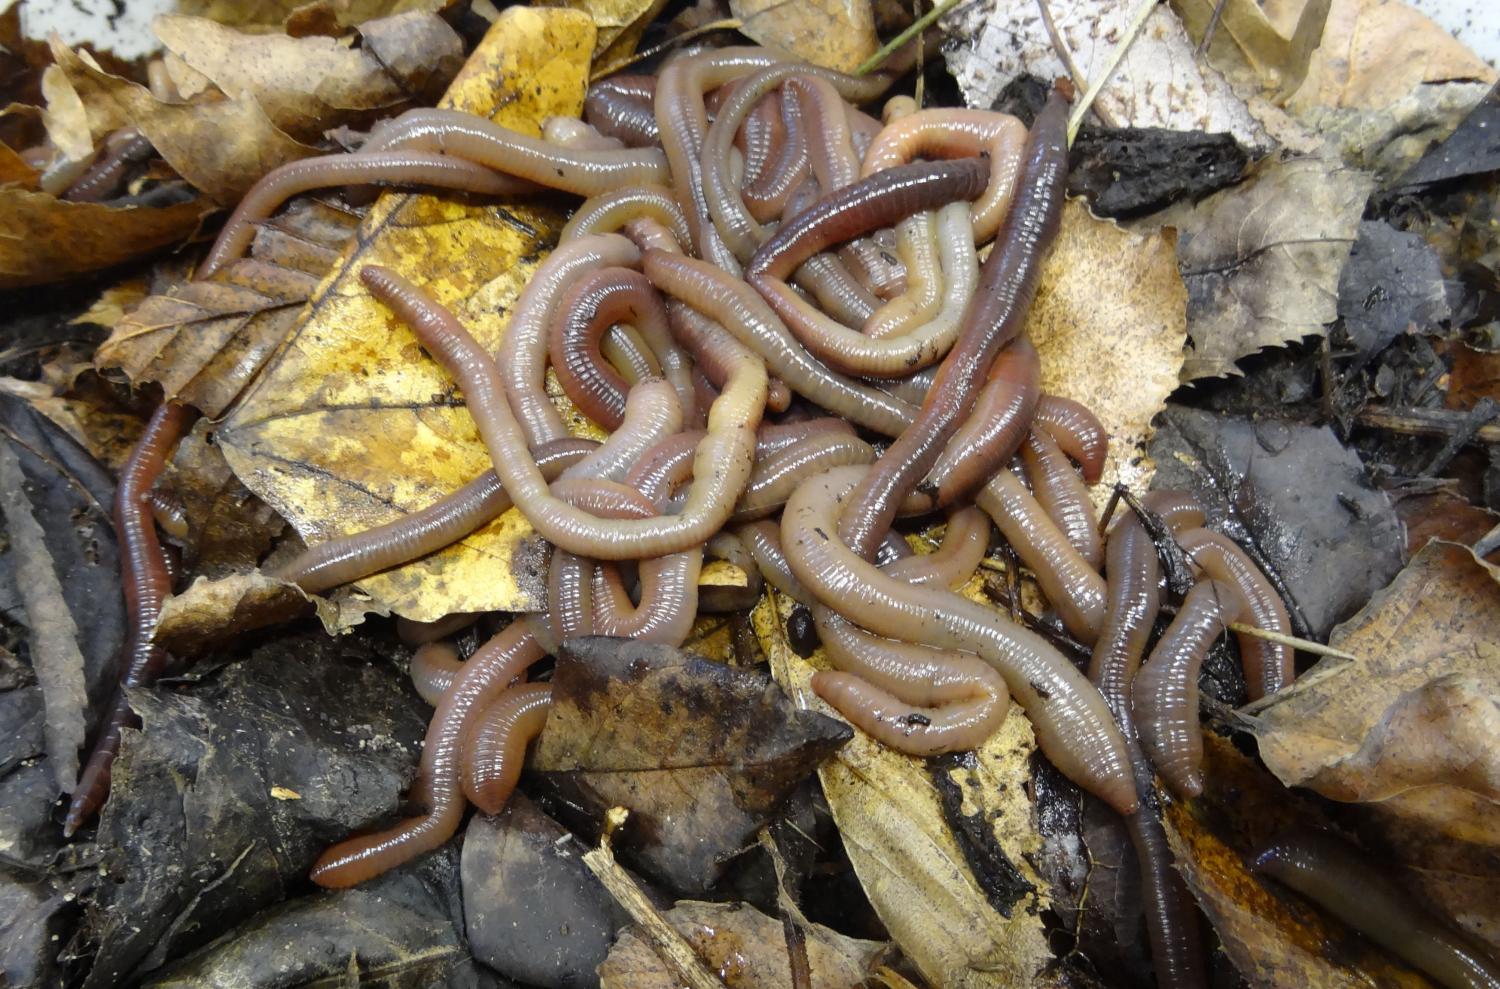 European earthworms decrease species diversity in North America